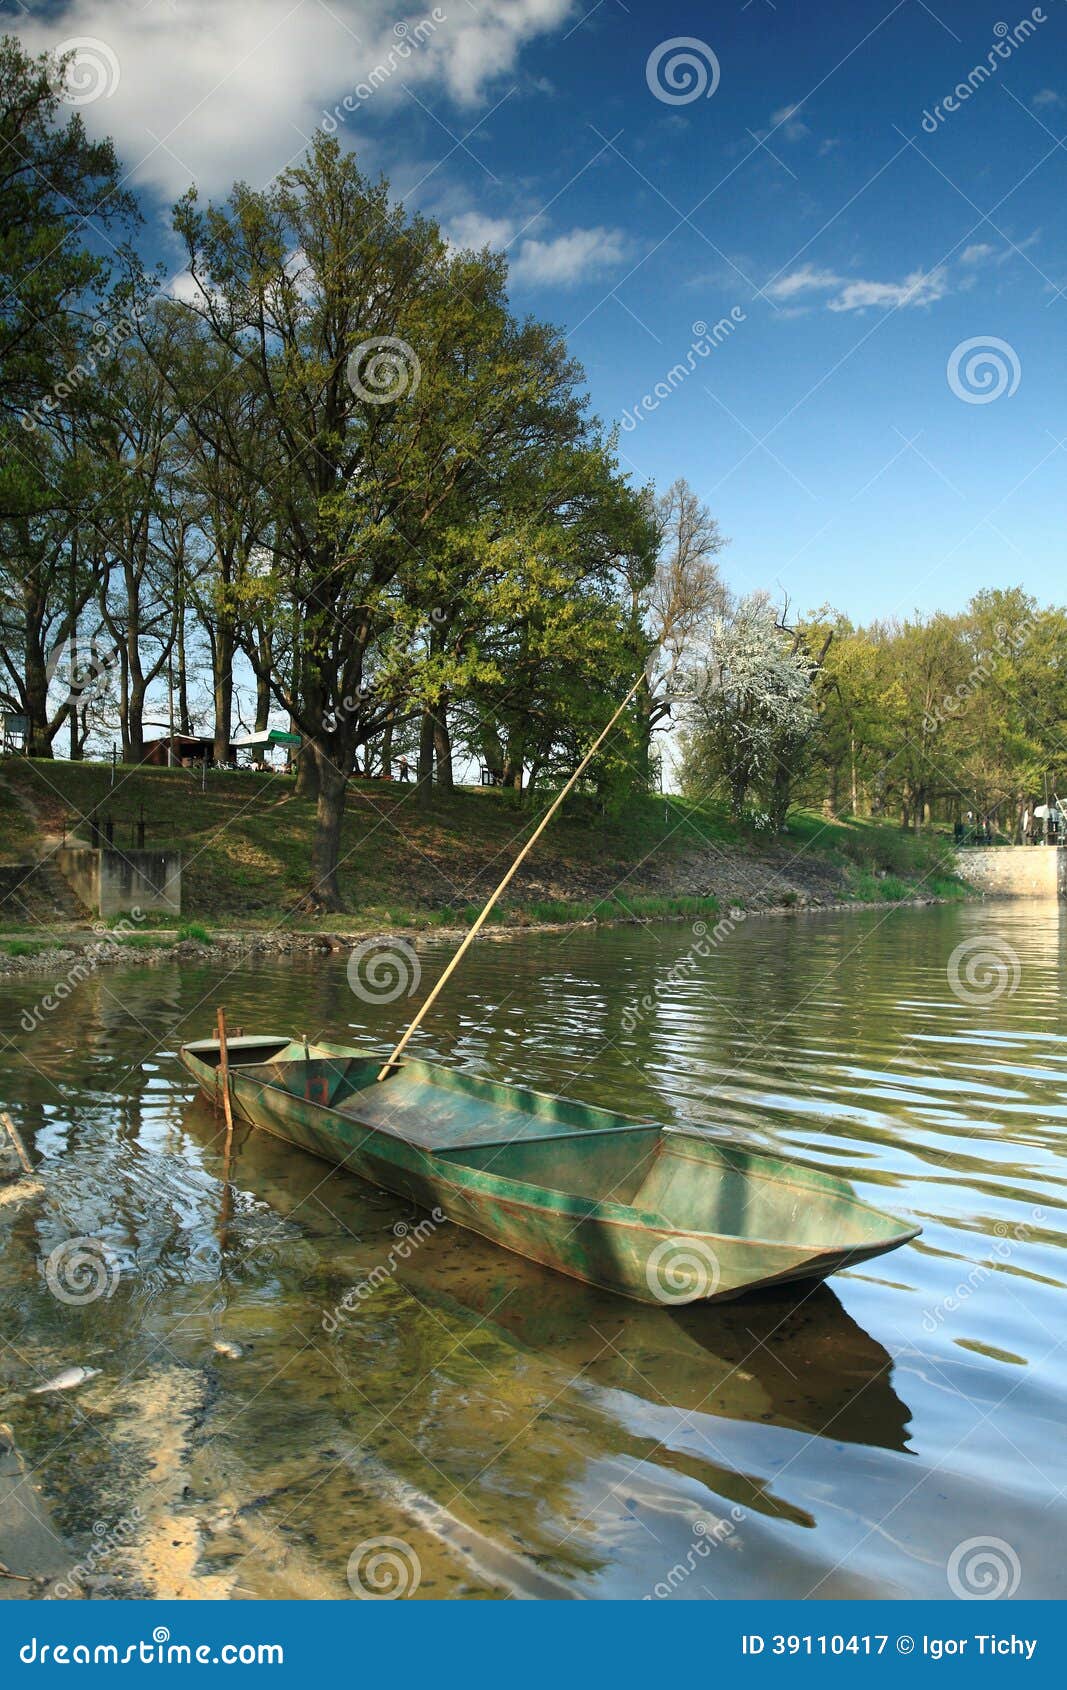 https://thumbs.dreamstime.com/z/fishing-boat-pond-rozmberk-large-fish-th-century-south-bohemian-region-czech-republic-next-to-town-trebon-its-39110417.jpg